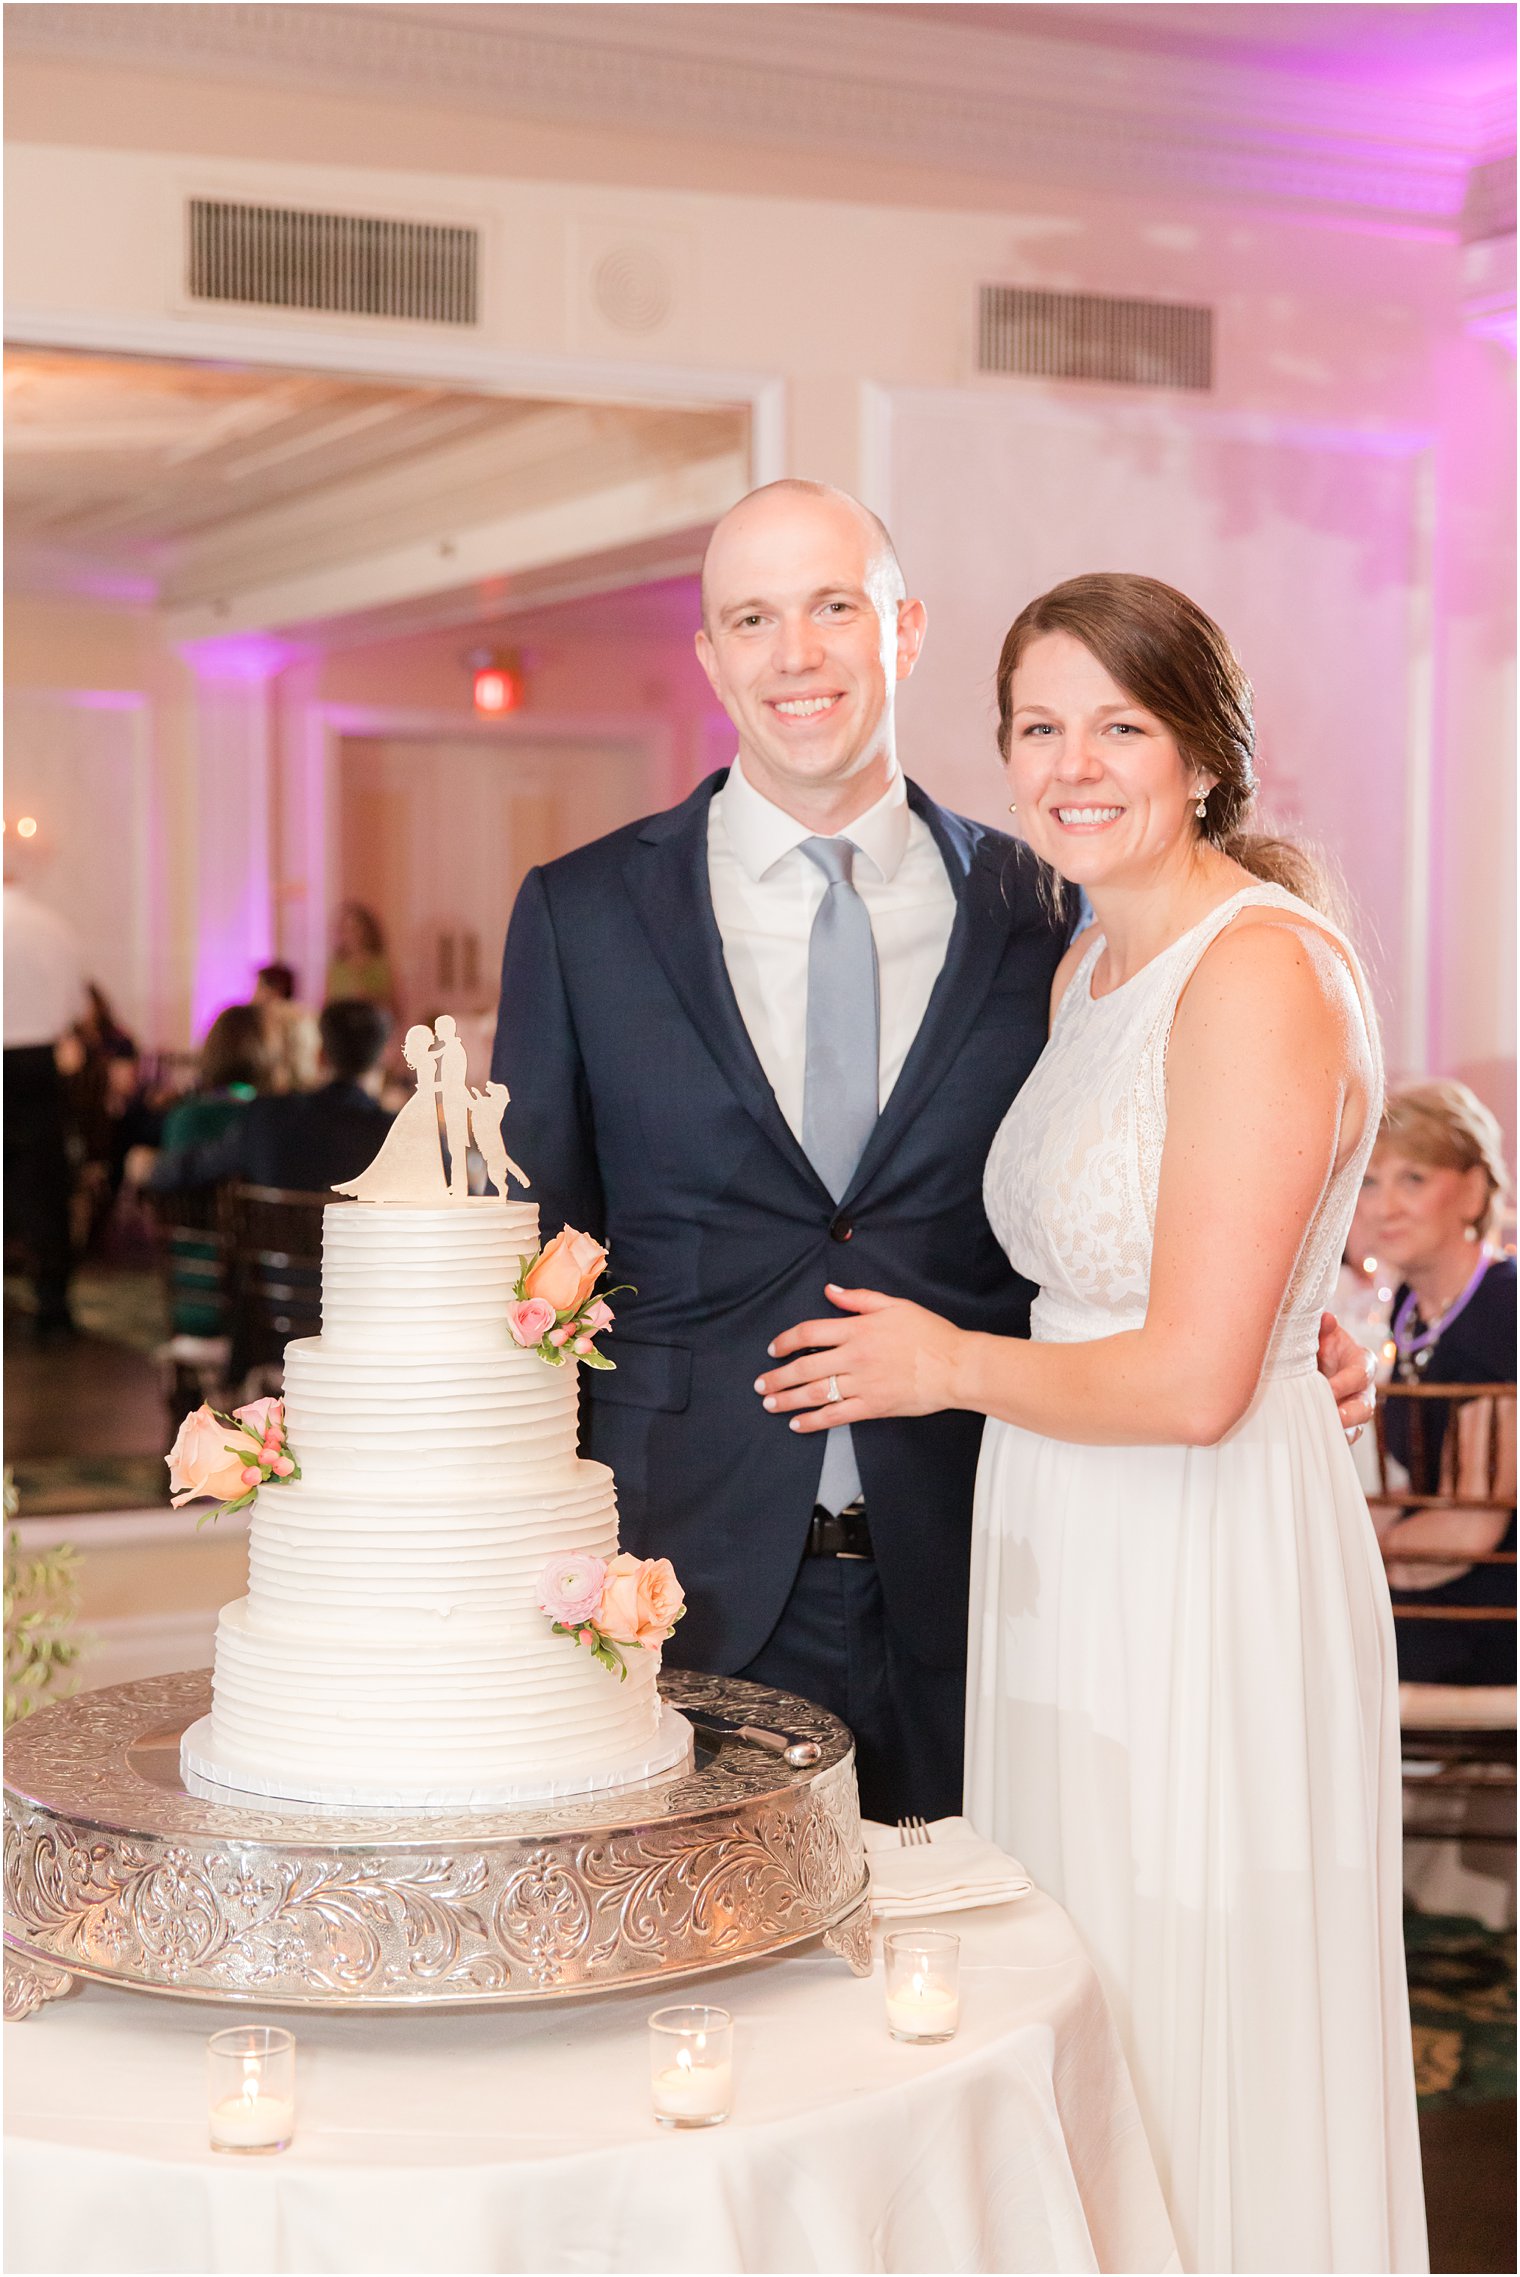 newlyweds pose by wedding cake during Red Bank NJ wedding reception